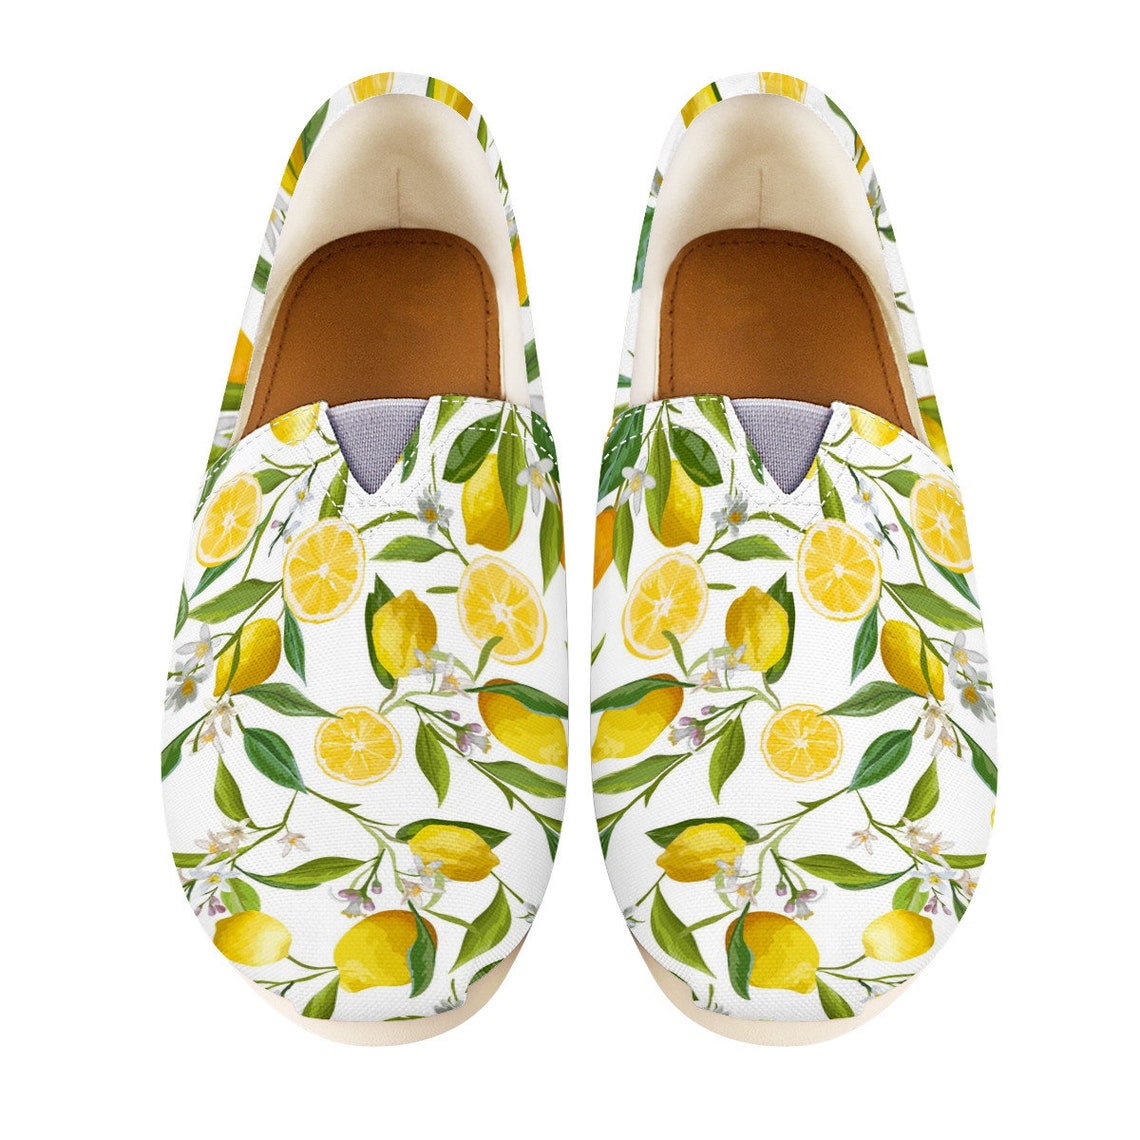 Lemon Shoes Lemon Women Shoes Shoes With Lemon Lemon | Etsy